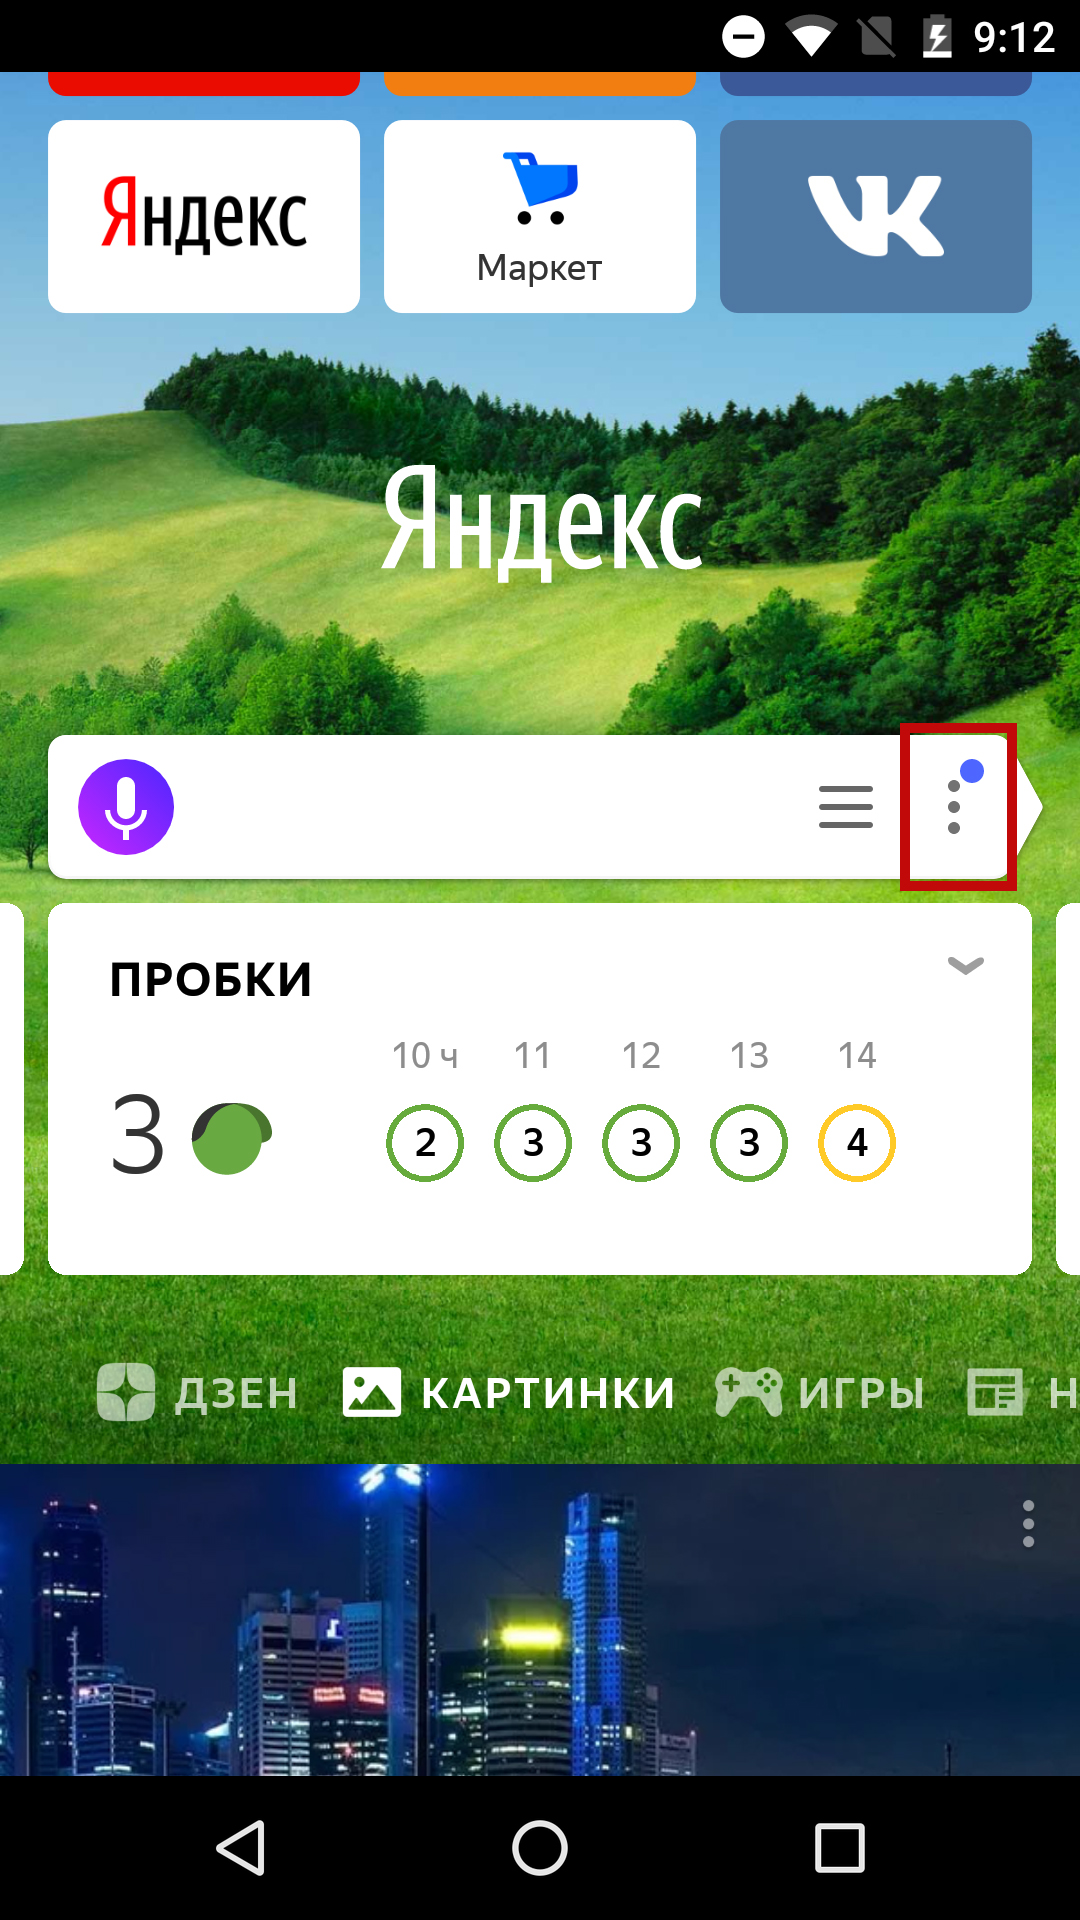 Как включить режим инкогнито в Яндекс Браузере на телефоне